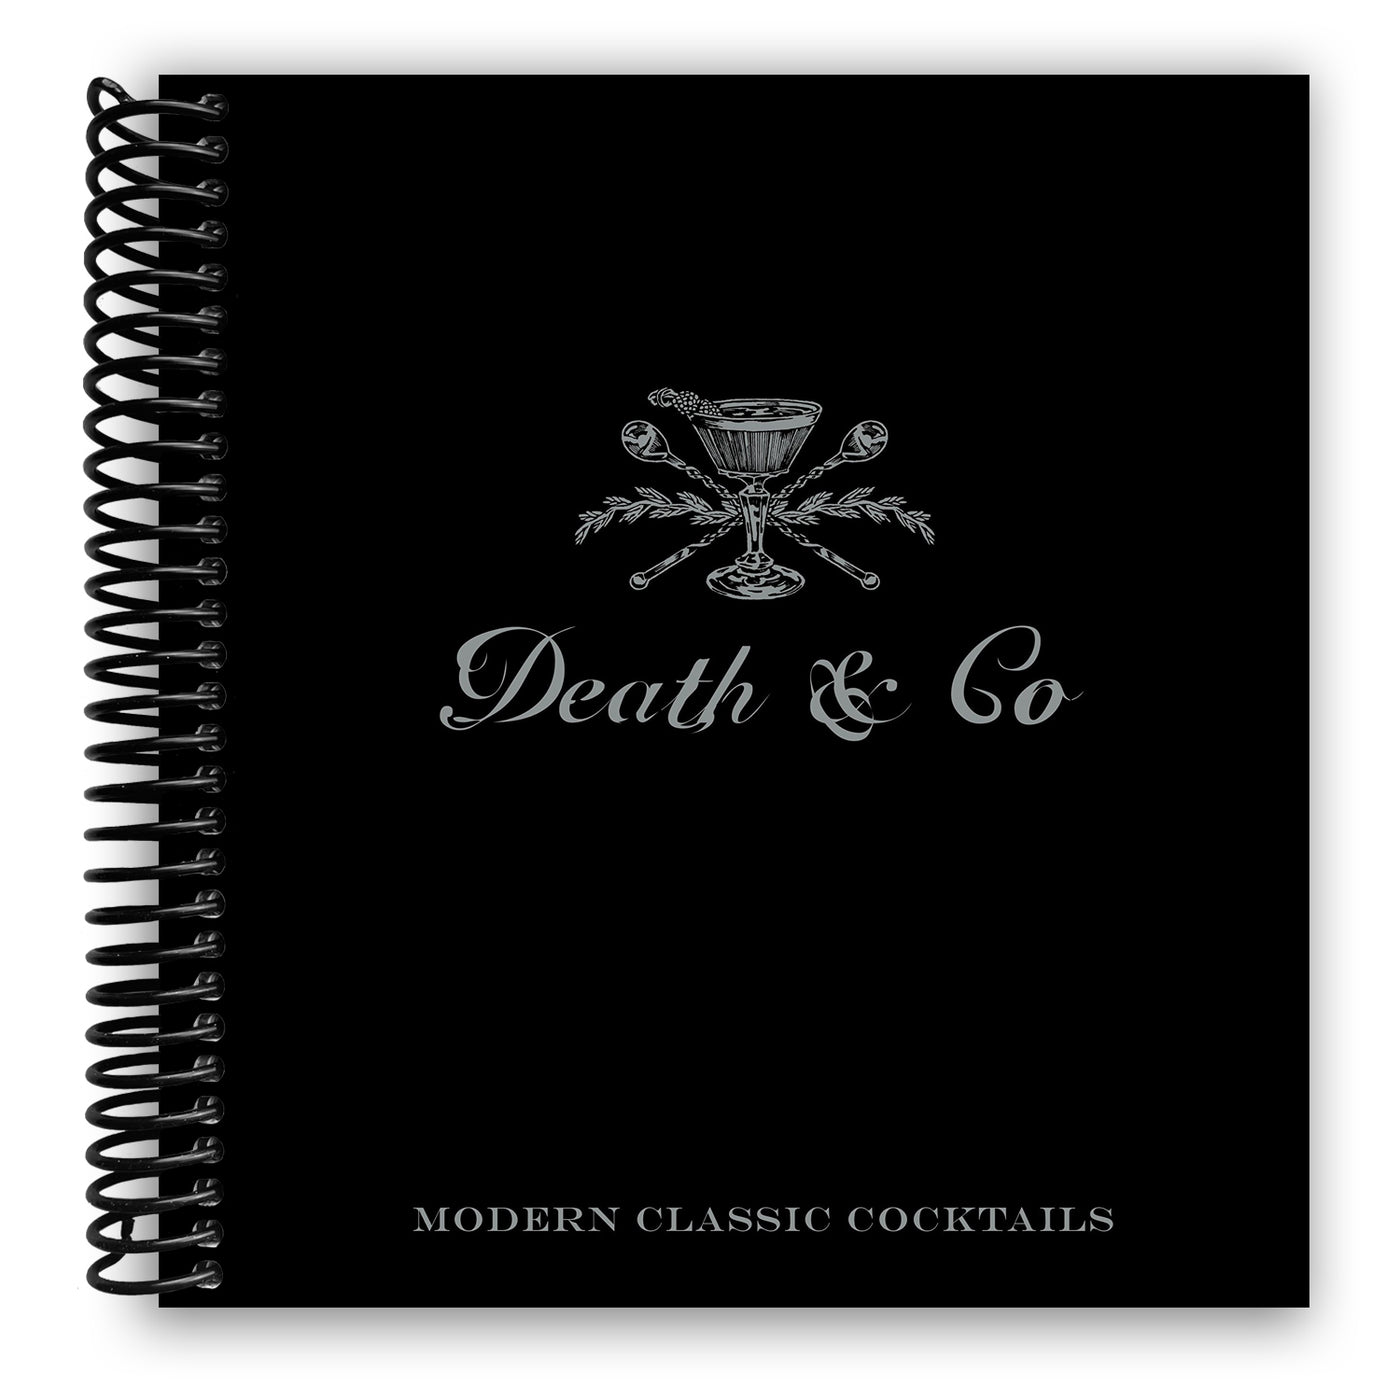 Death & Co: Modern Classic Cocktails (Spiral Bound)